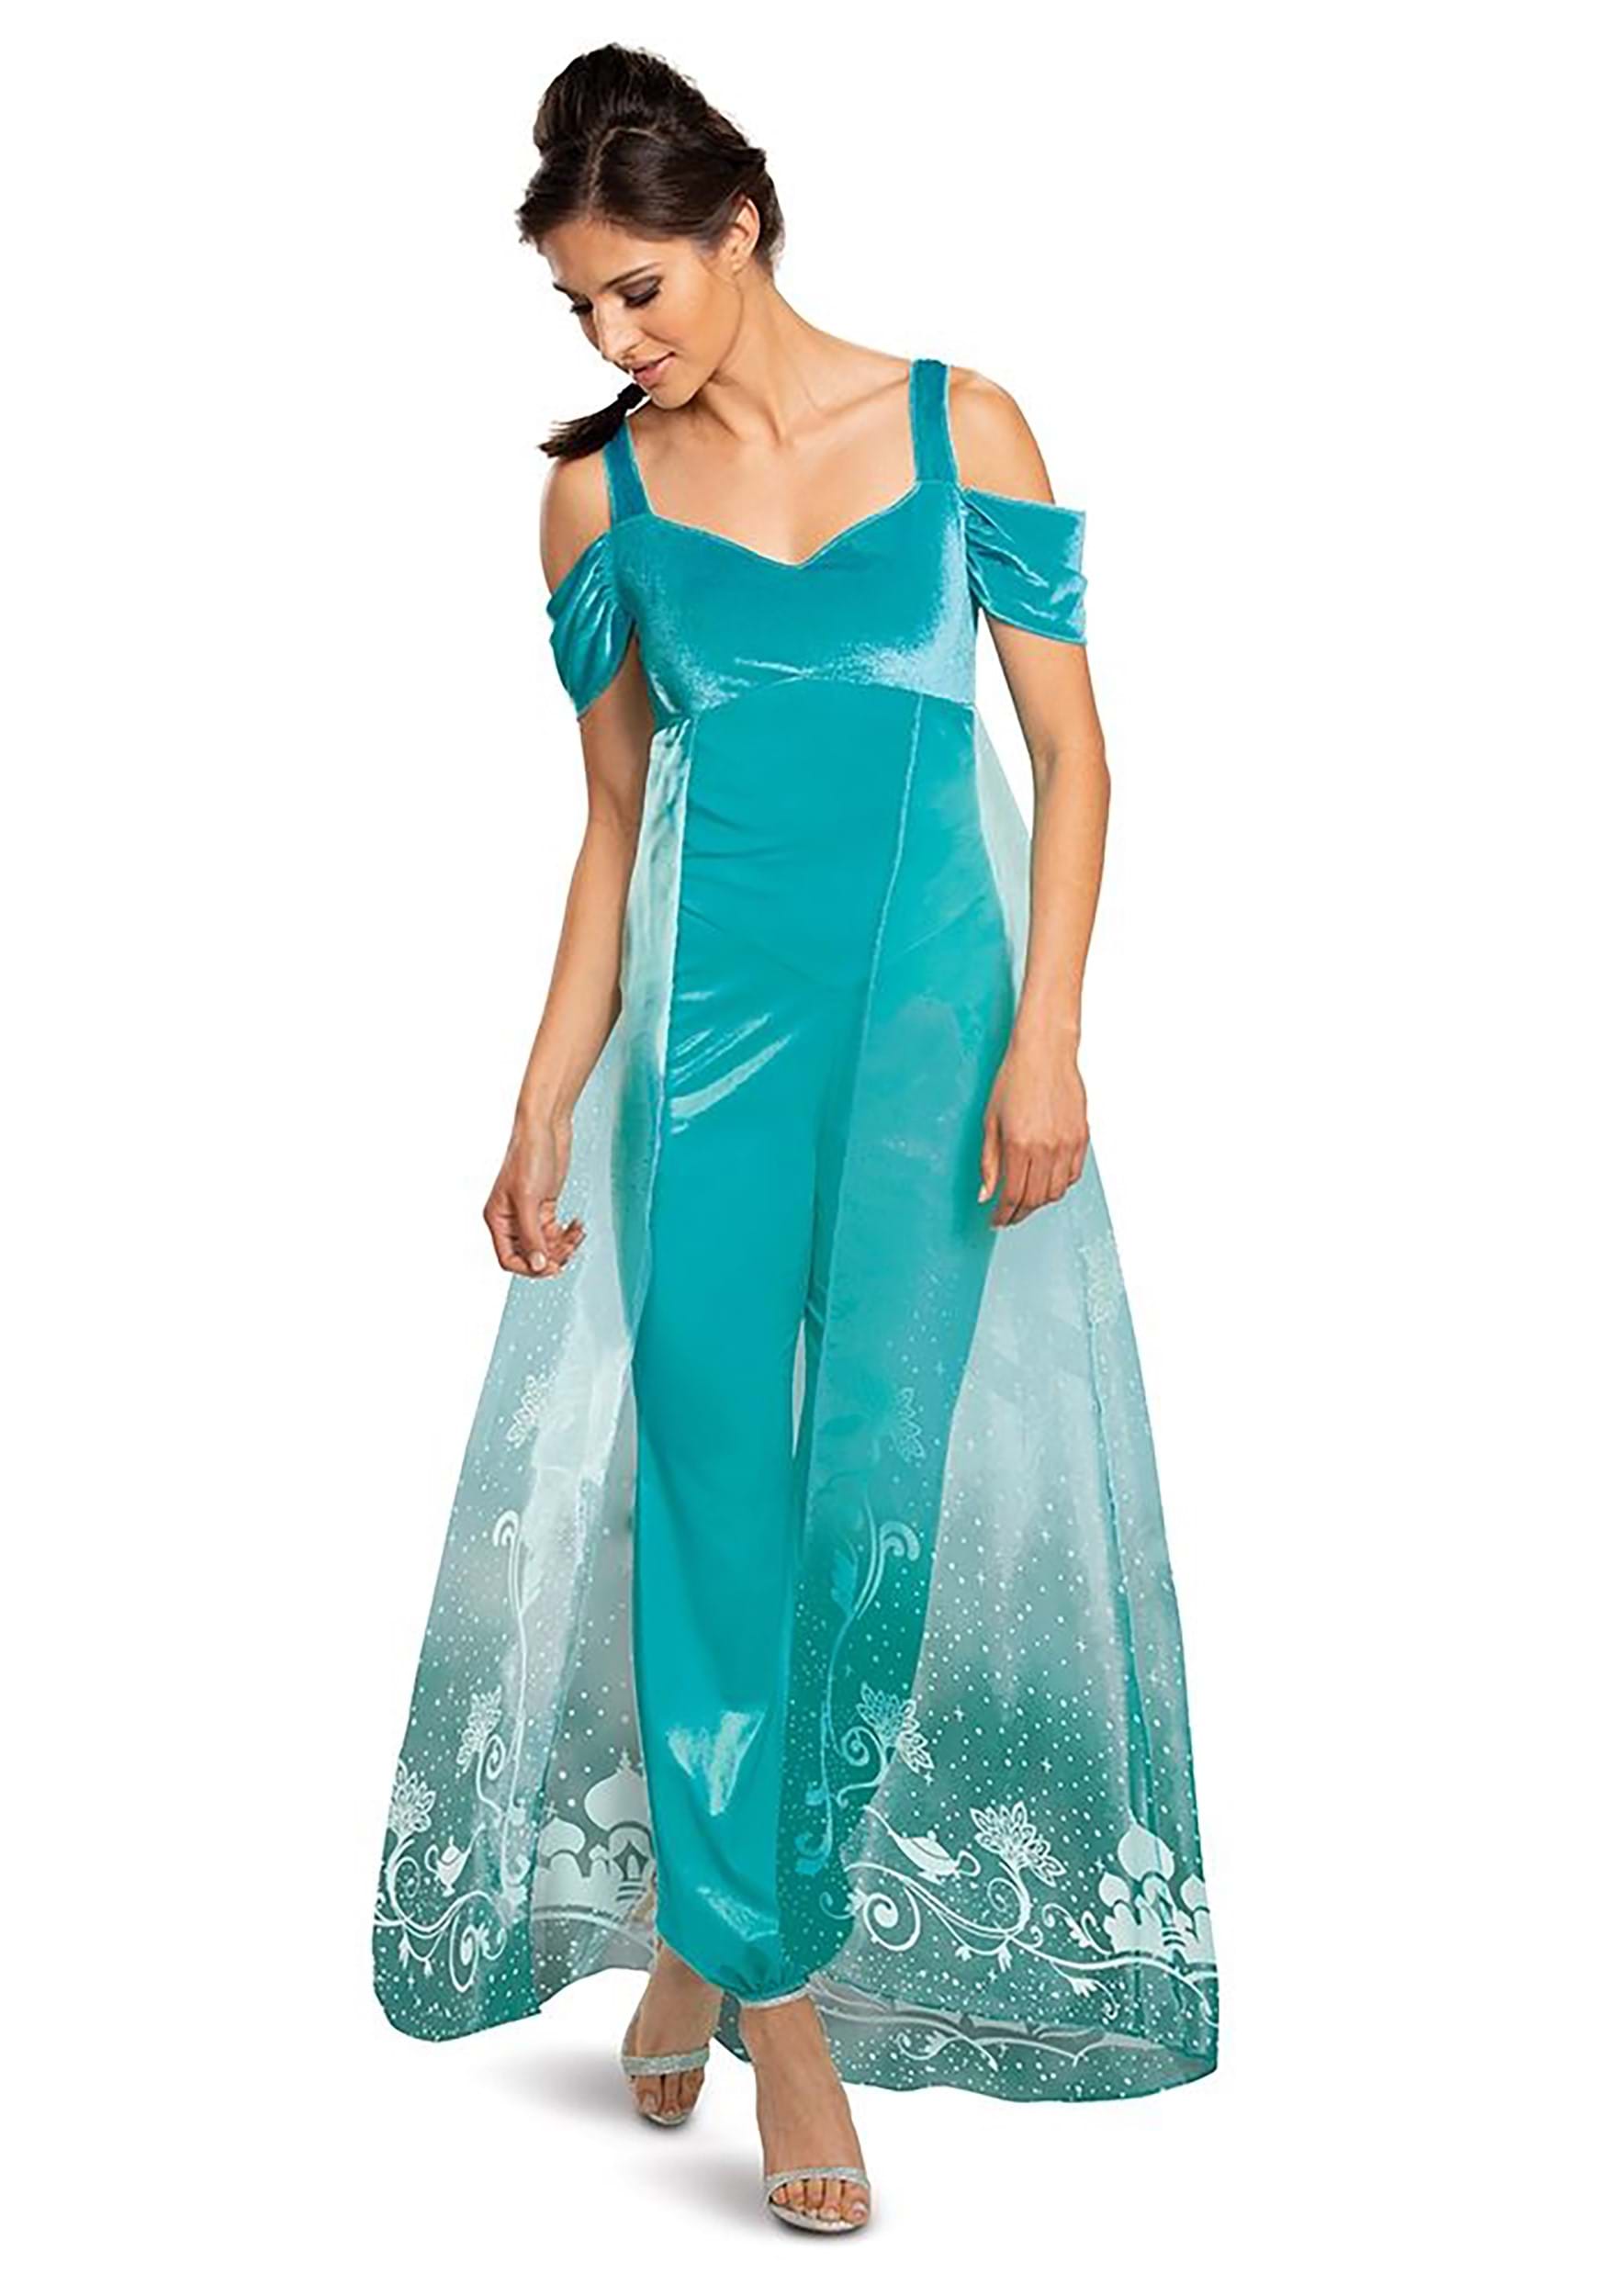 Jasmine's blue costume as seen in Aladdin